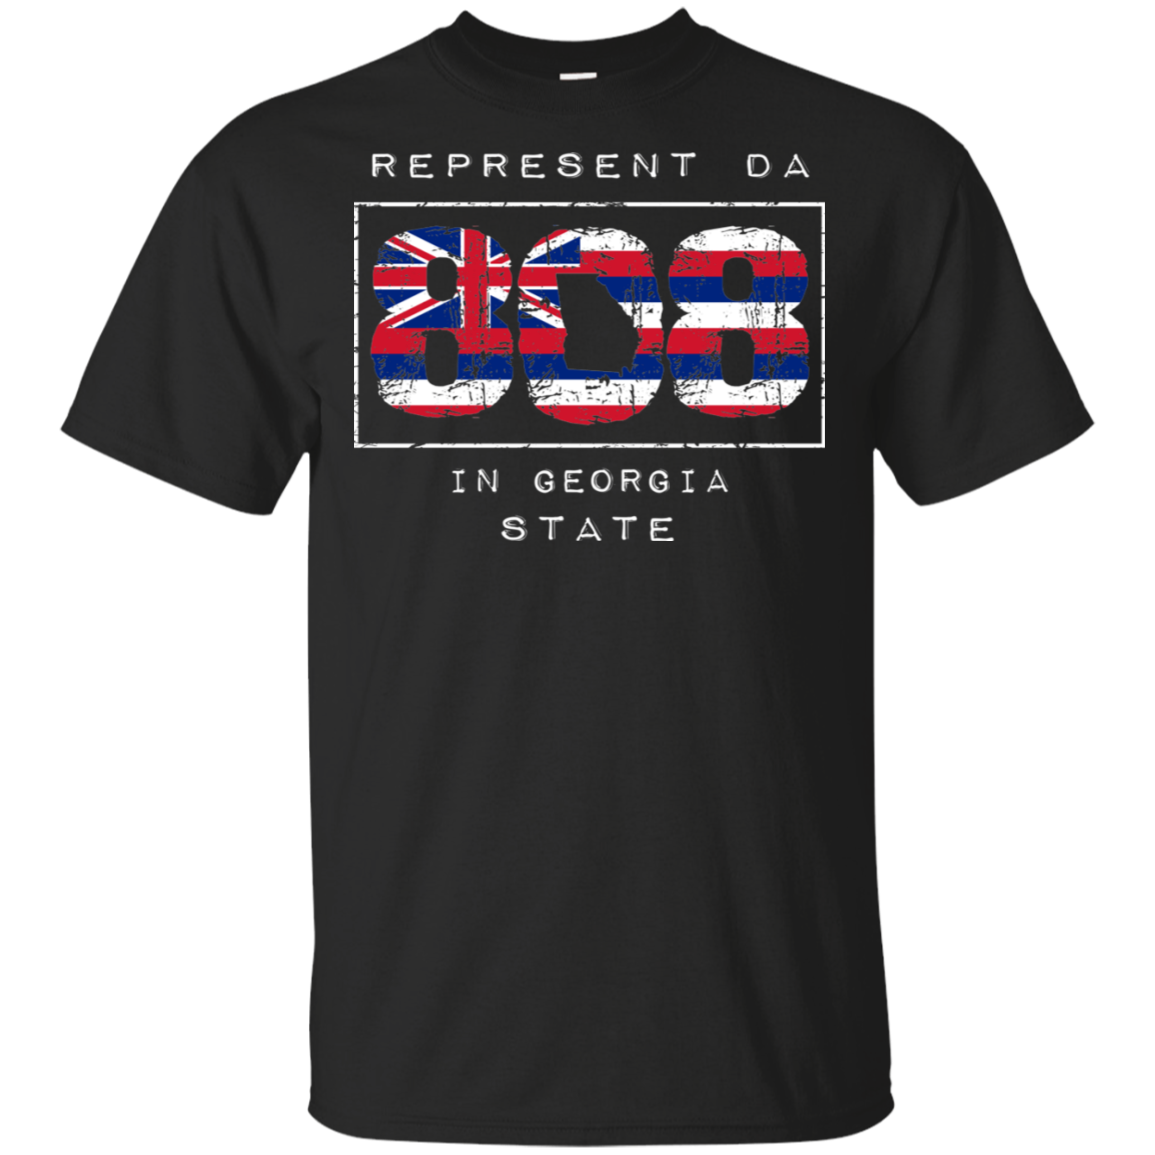 Rep Da 808 In Georgia State Ultra Cotton T-Shirt, T-Shirts, Hawaii Nei All Day